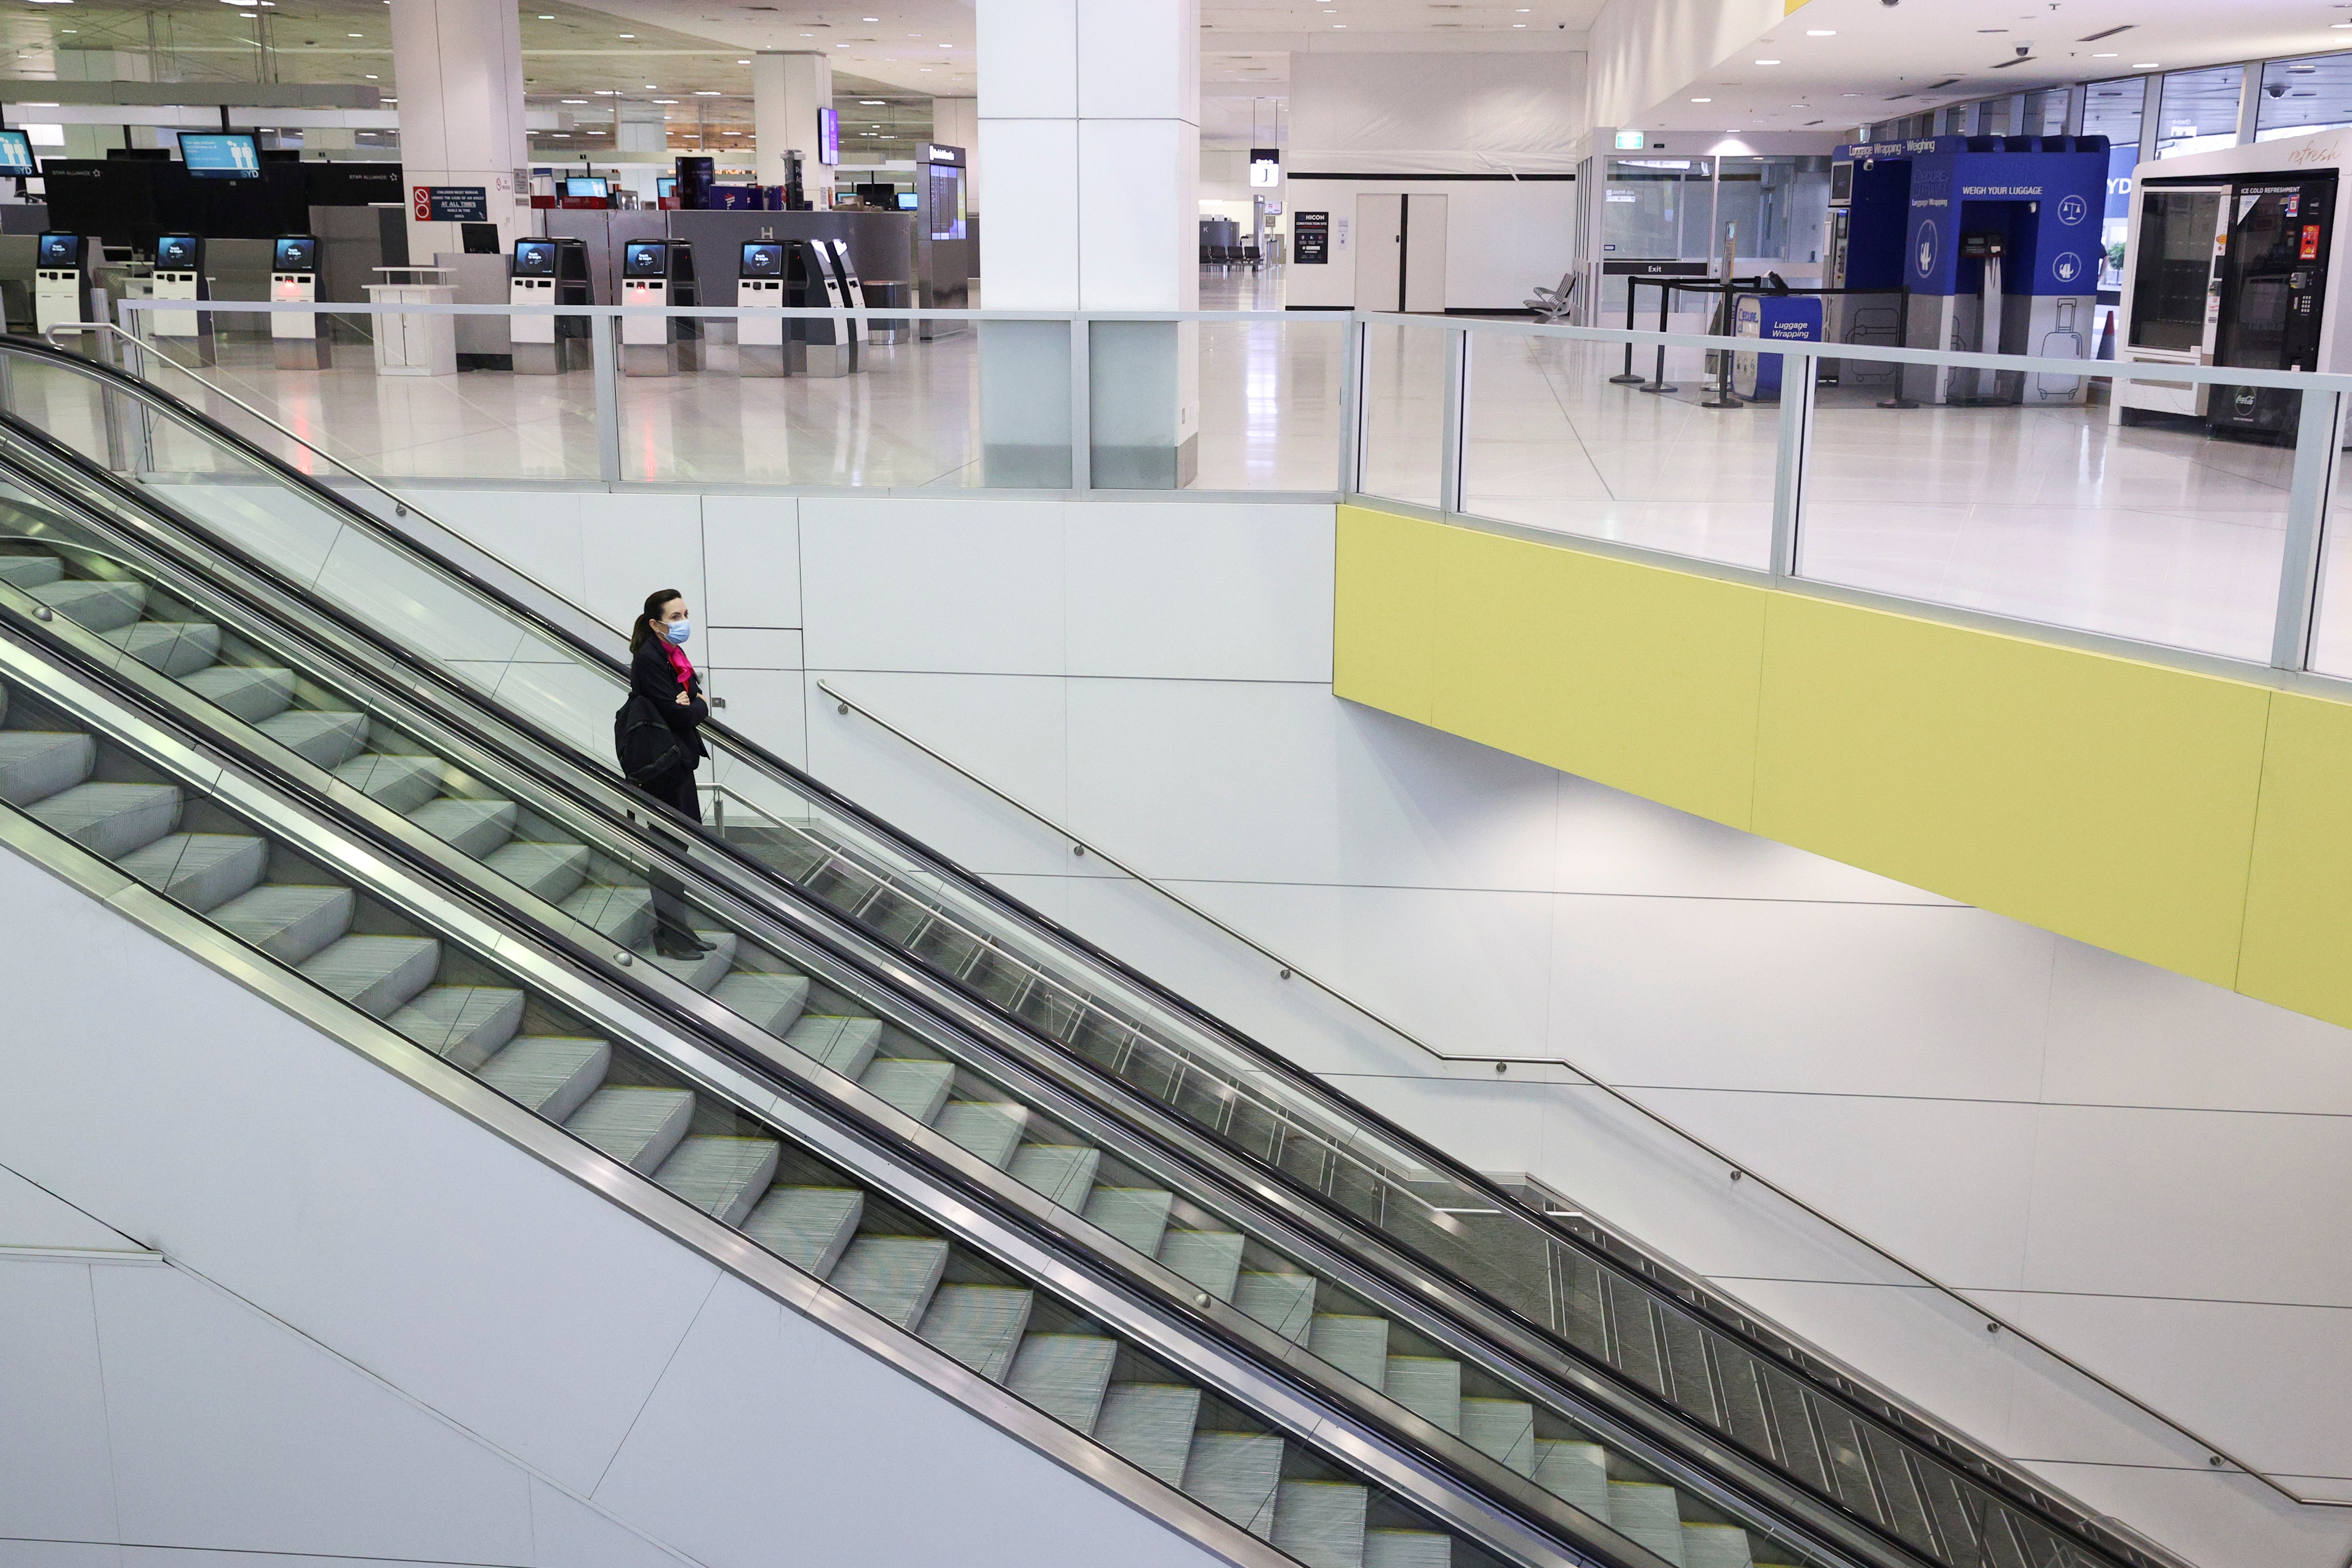 A flight crew member stands on an escalator in the international terminal at Sydney Airport, as countries react to the new coronavirus Omicron variant amid the coronavirus disease (COVID-19) pandemic, in Sydney, Australia, November 30, 2021. REUTERS/Loren Elliott